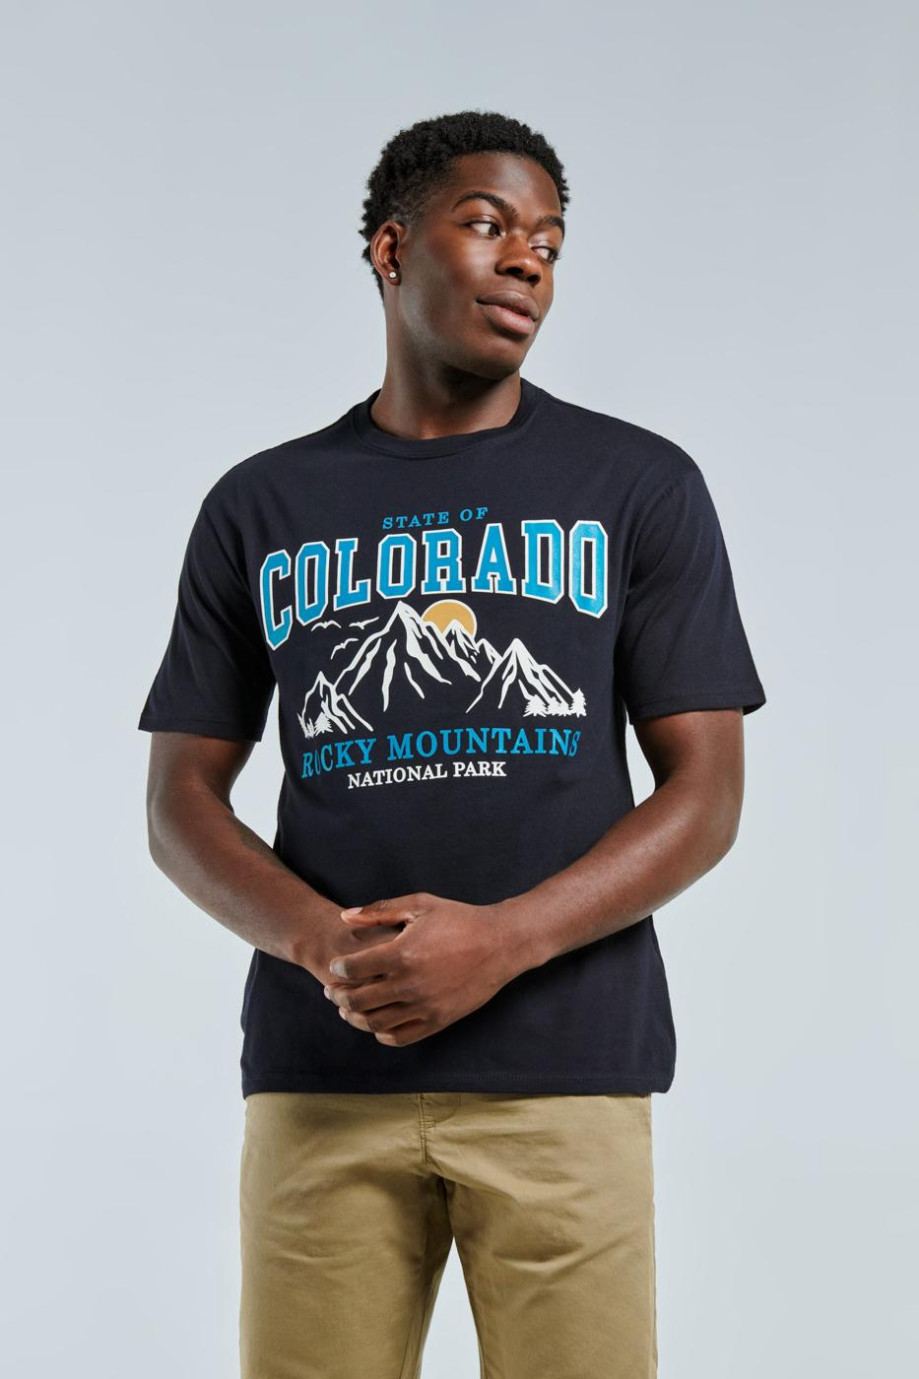 Camiseta manga corta azul con diseño college de Colorado